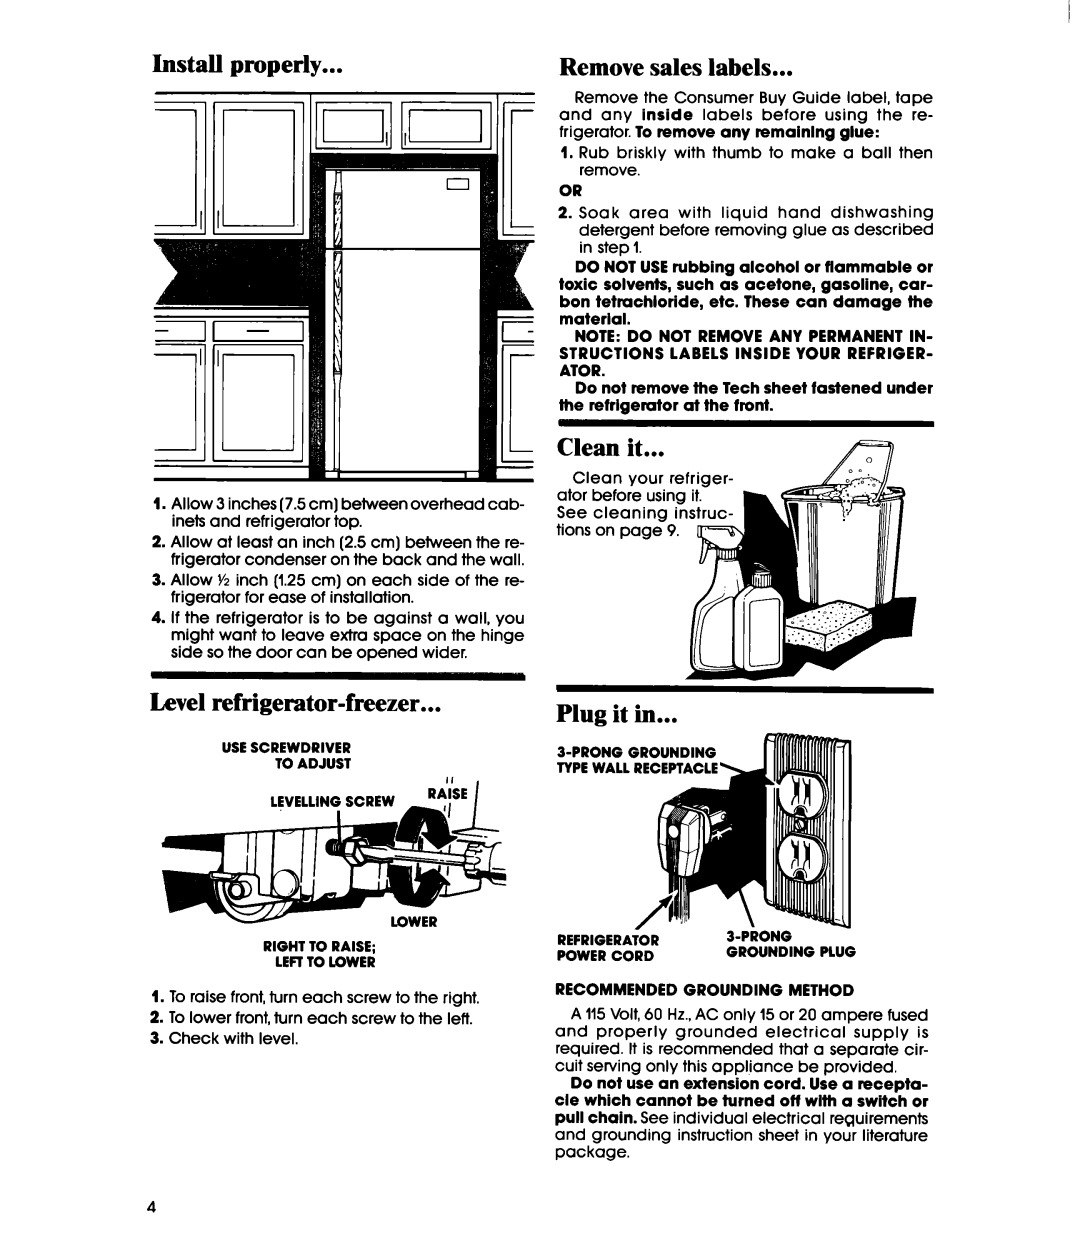 Whirlpool ETl8MK manual Remove sales labels, Clean it, Level refrigerator-freezer, Plug it in 